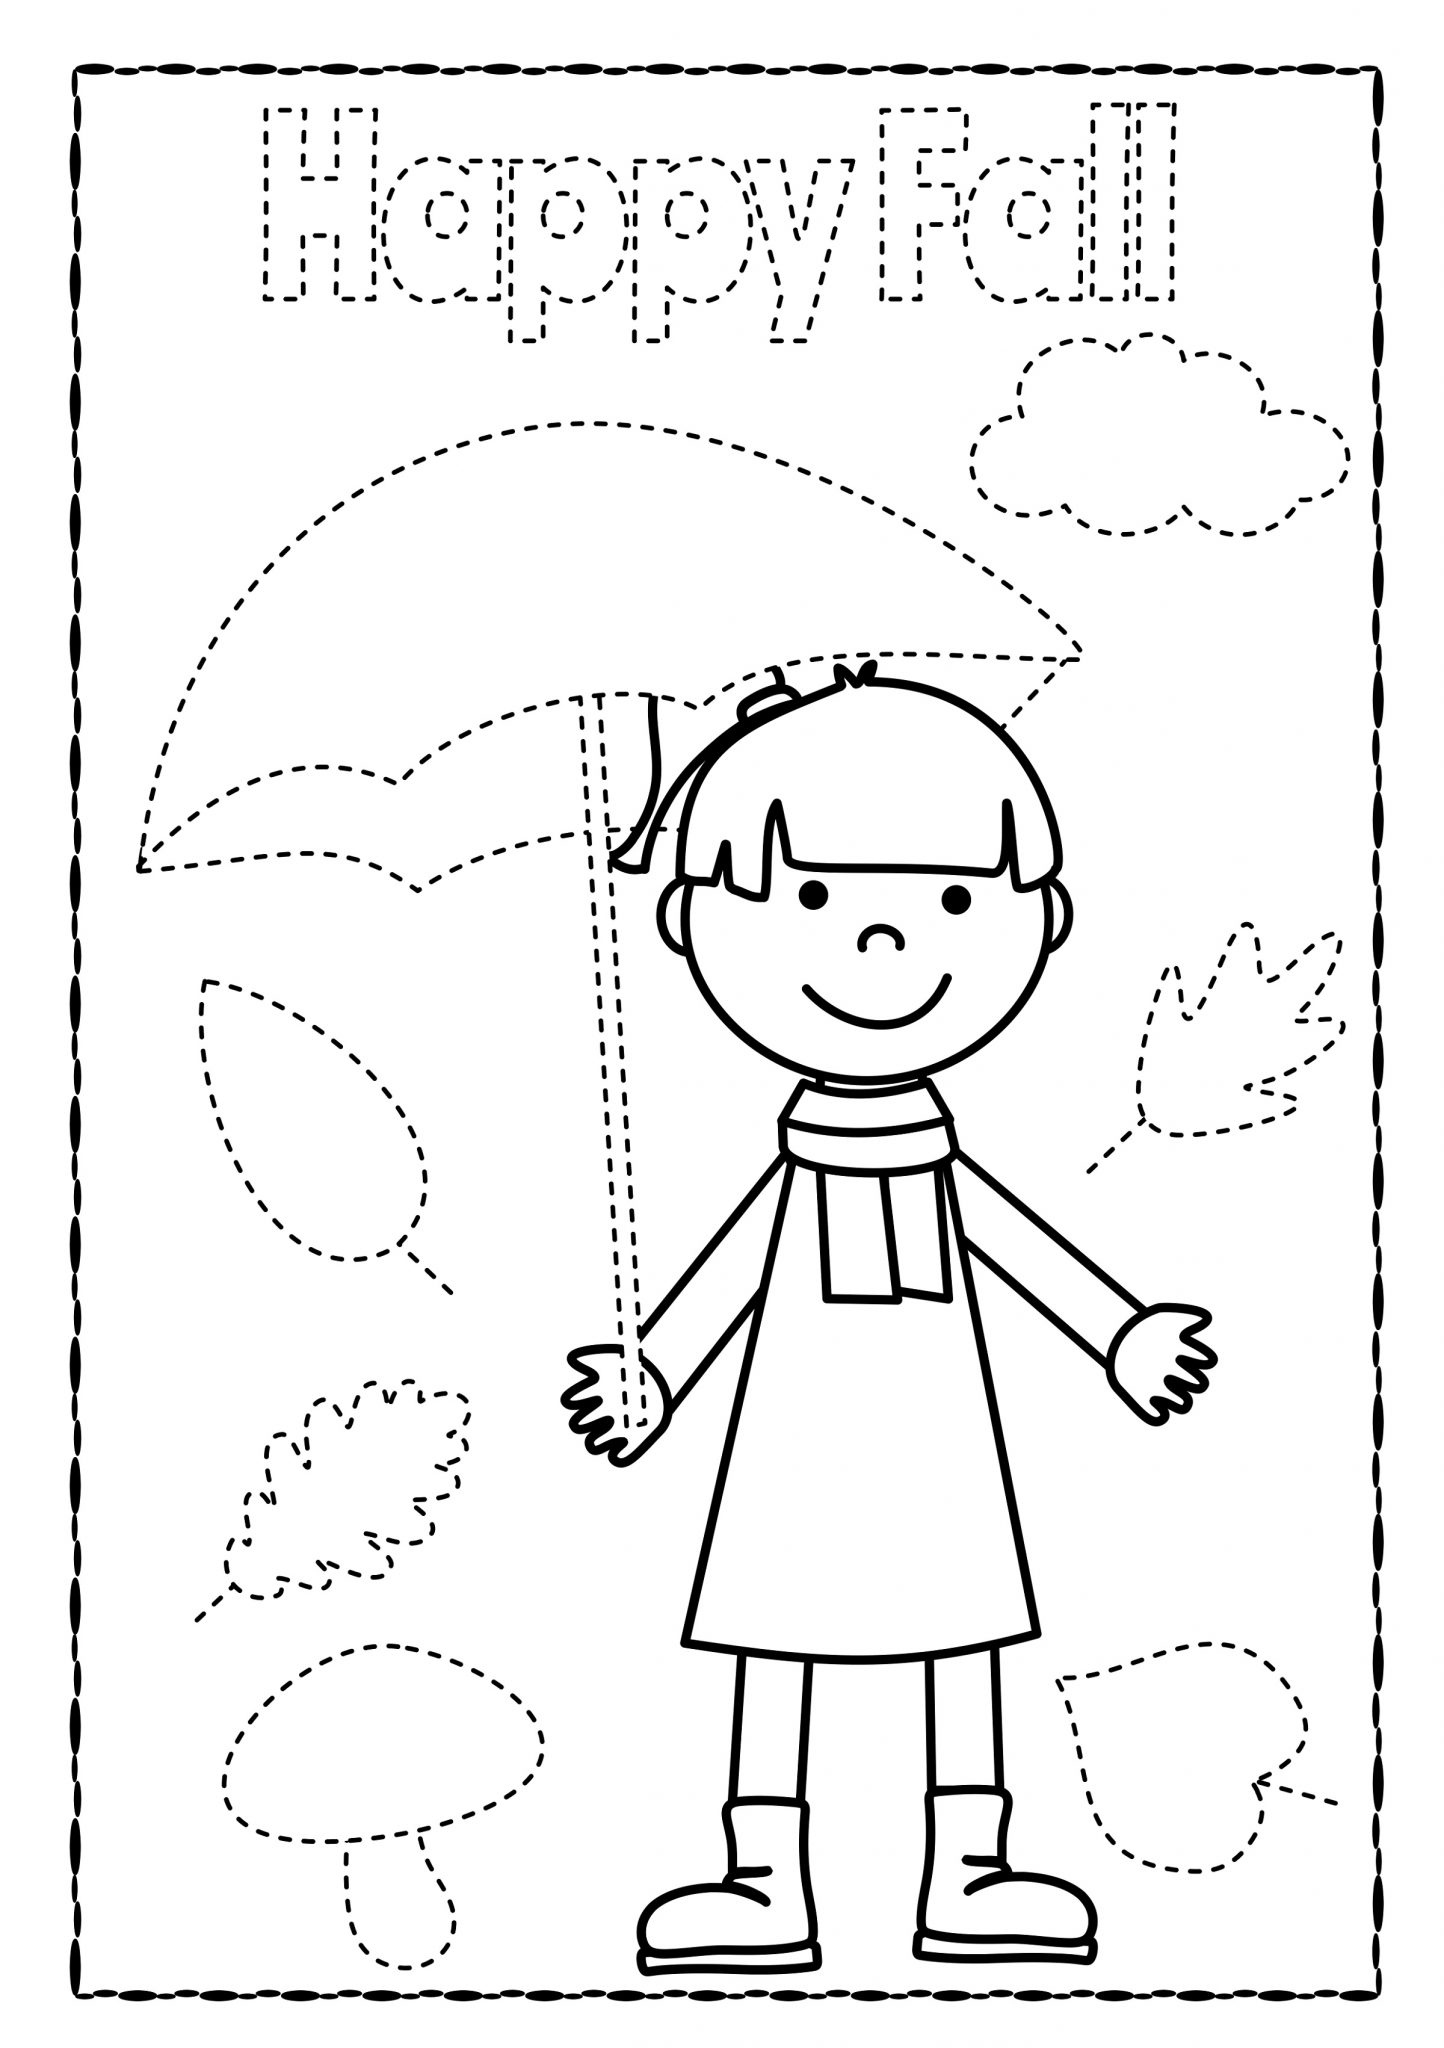 Free Printable Letter Tracing Worksheets For Preschoolers Letter 